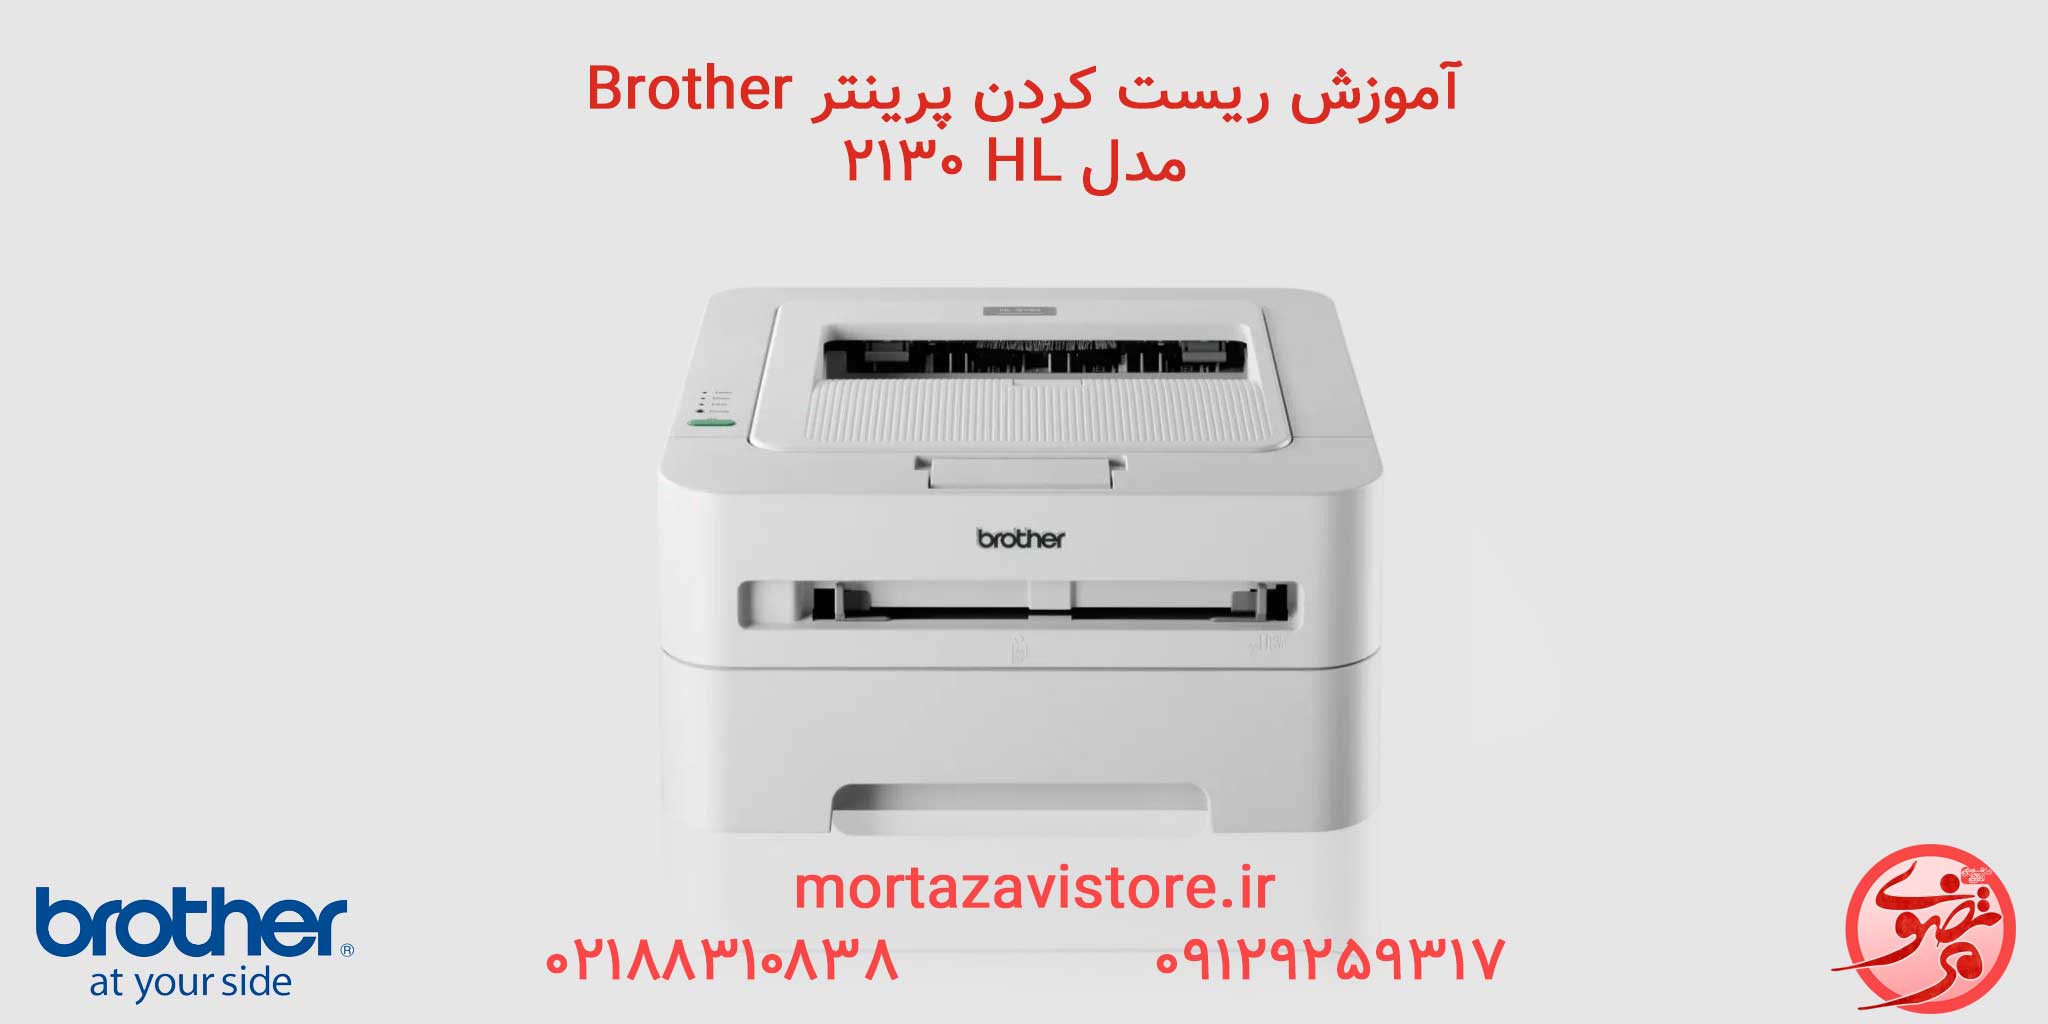 Brother-HL-2130 | آموزش ریست پرینتر Brother مدل HL-2130